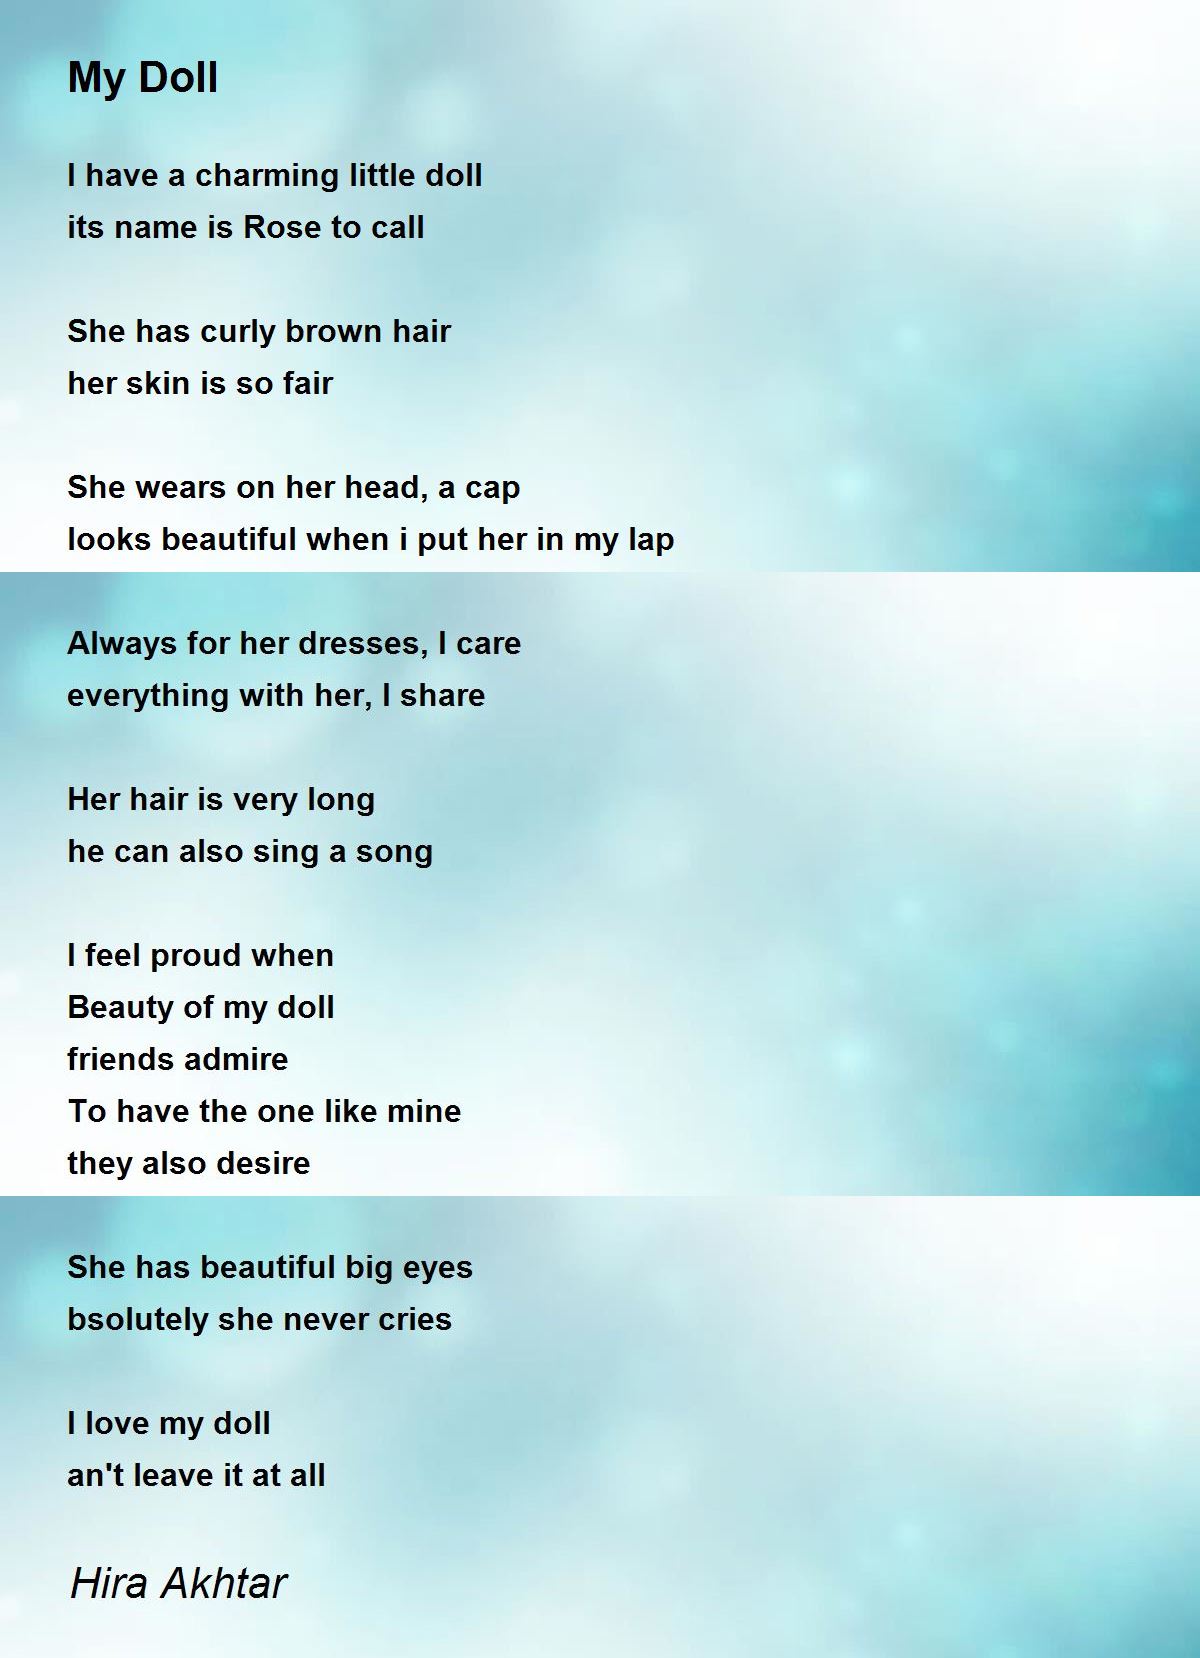 My Doll Poem by Hira Akhtar - Poem Hunter